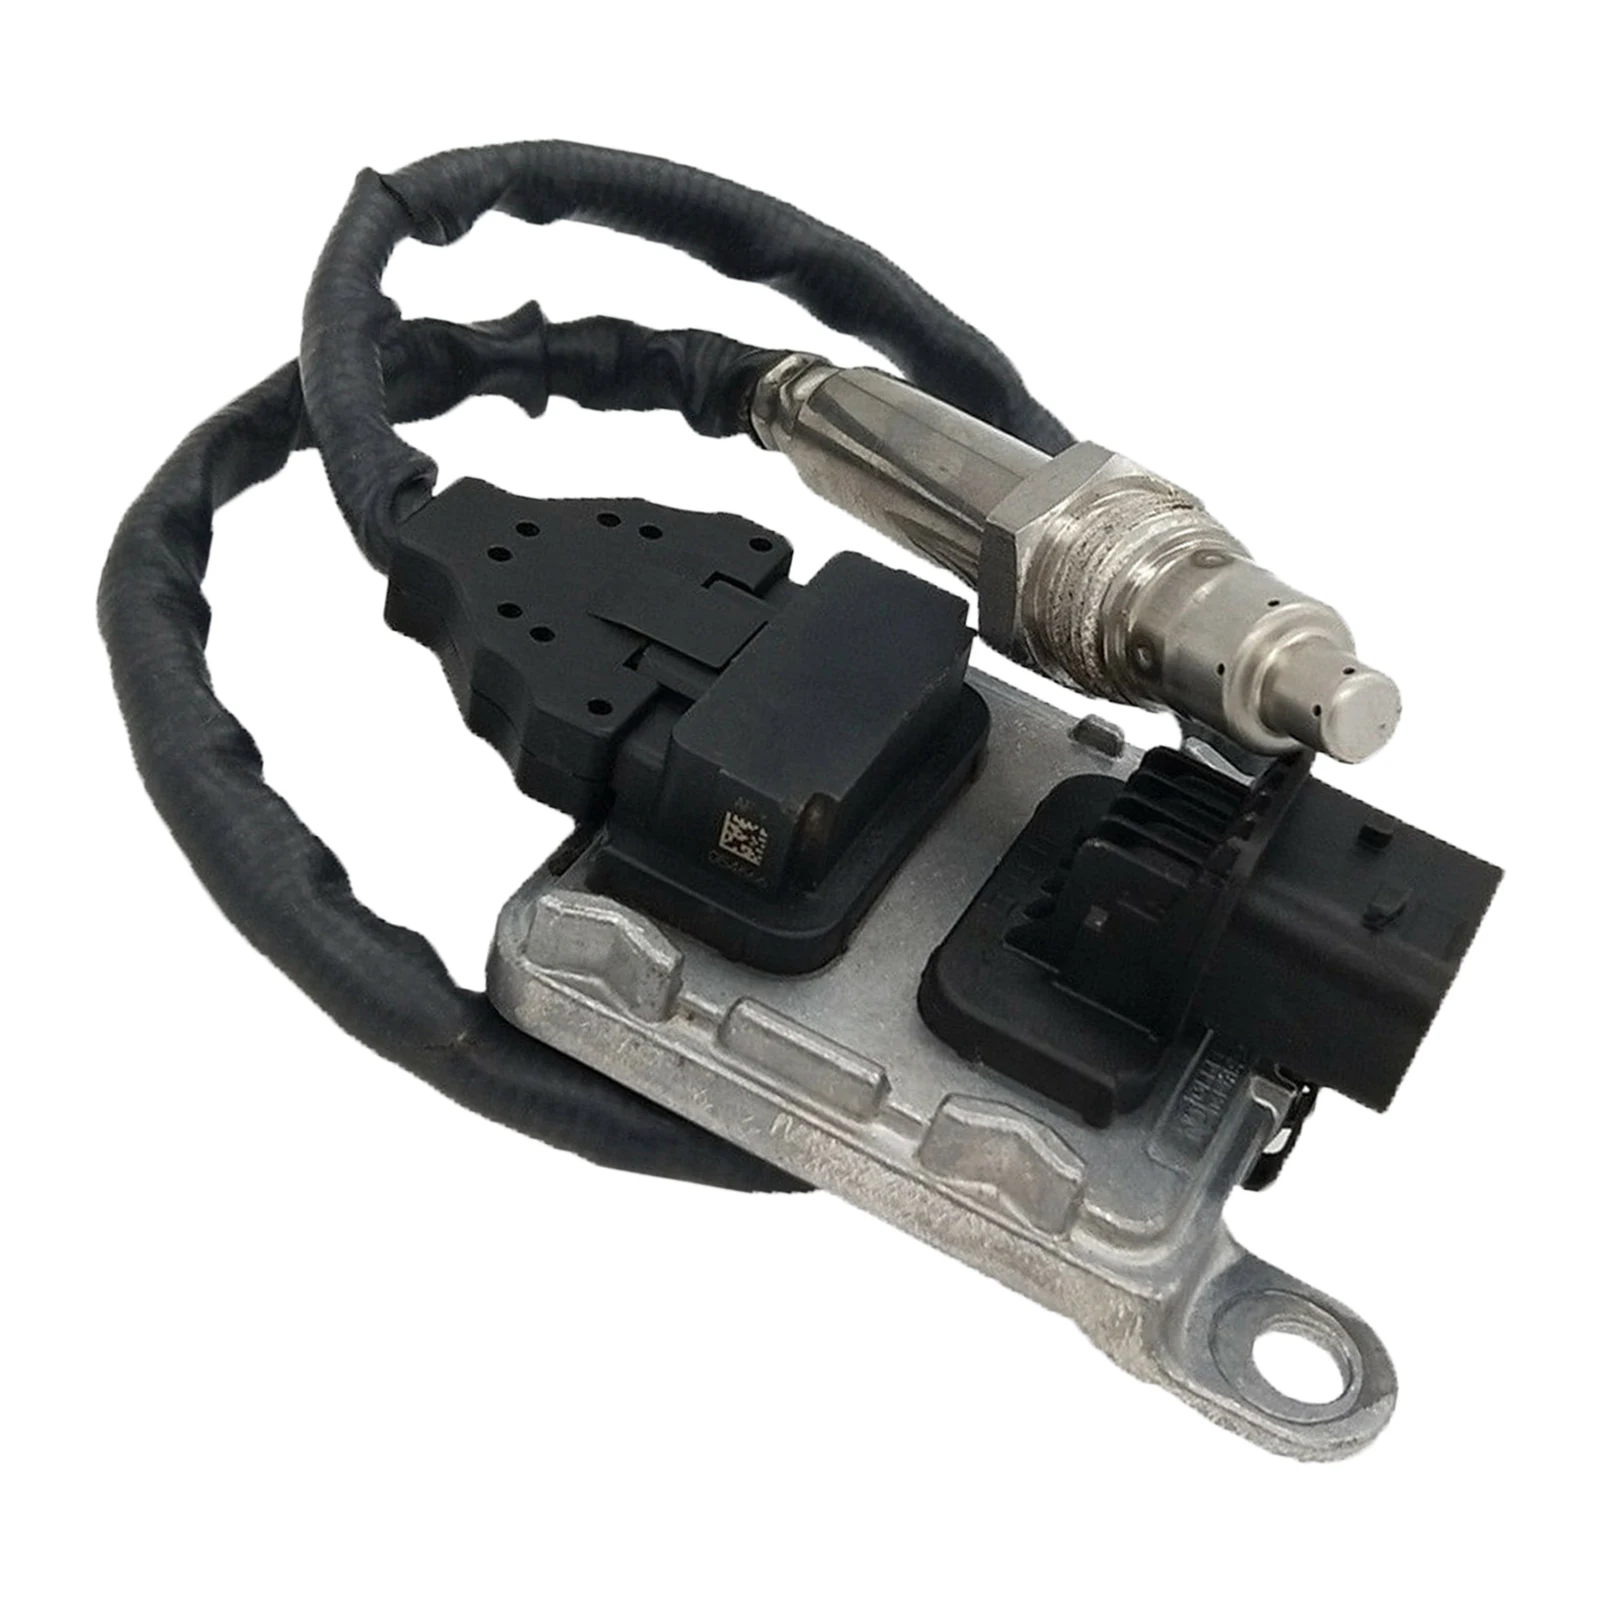 A0101531928 Nitrogen Oxide Sensor, Nox Sensor, Fits for Mercedes Detroit Engine Inlet DD13 DD15 DD16 Motor Part Car Accessories